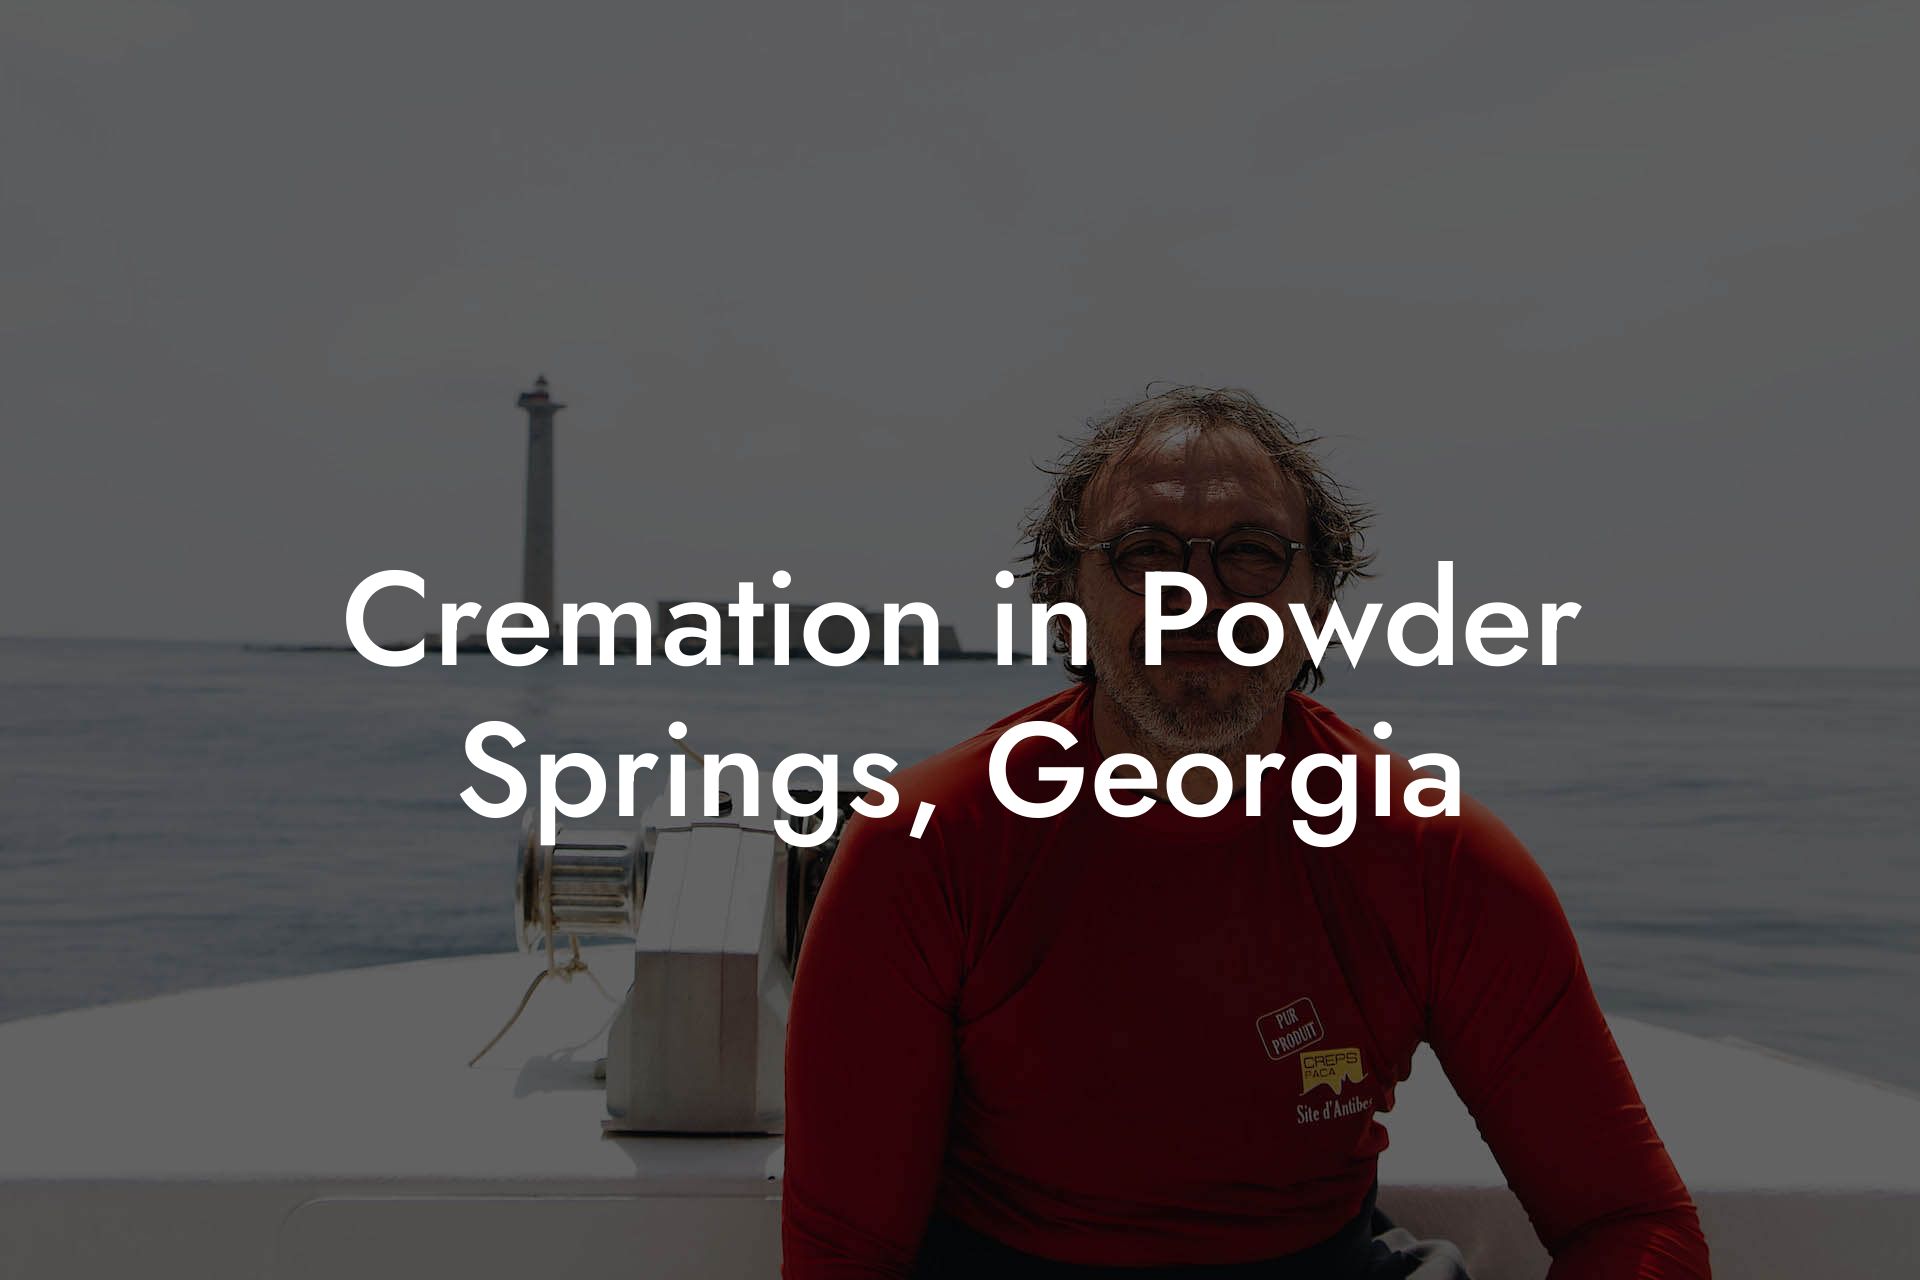 Cremation in Powder Springs, Georgia